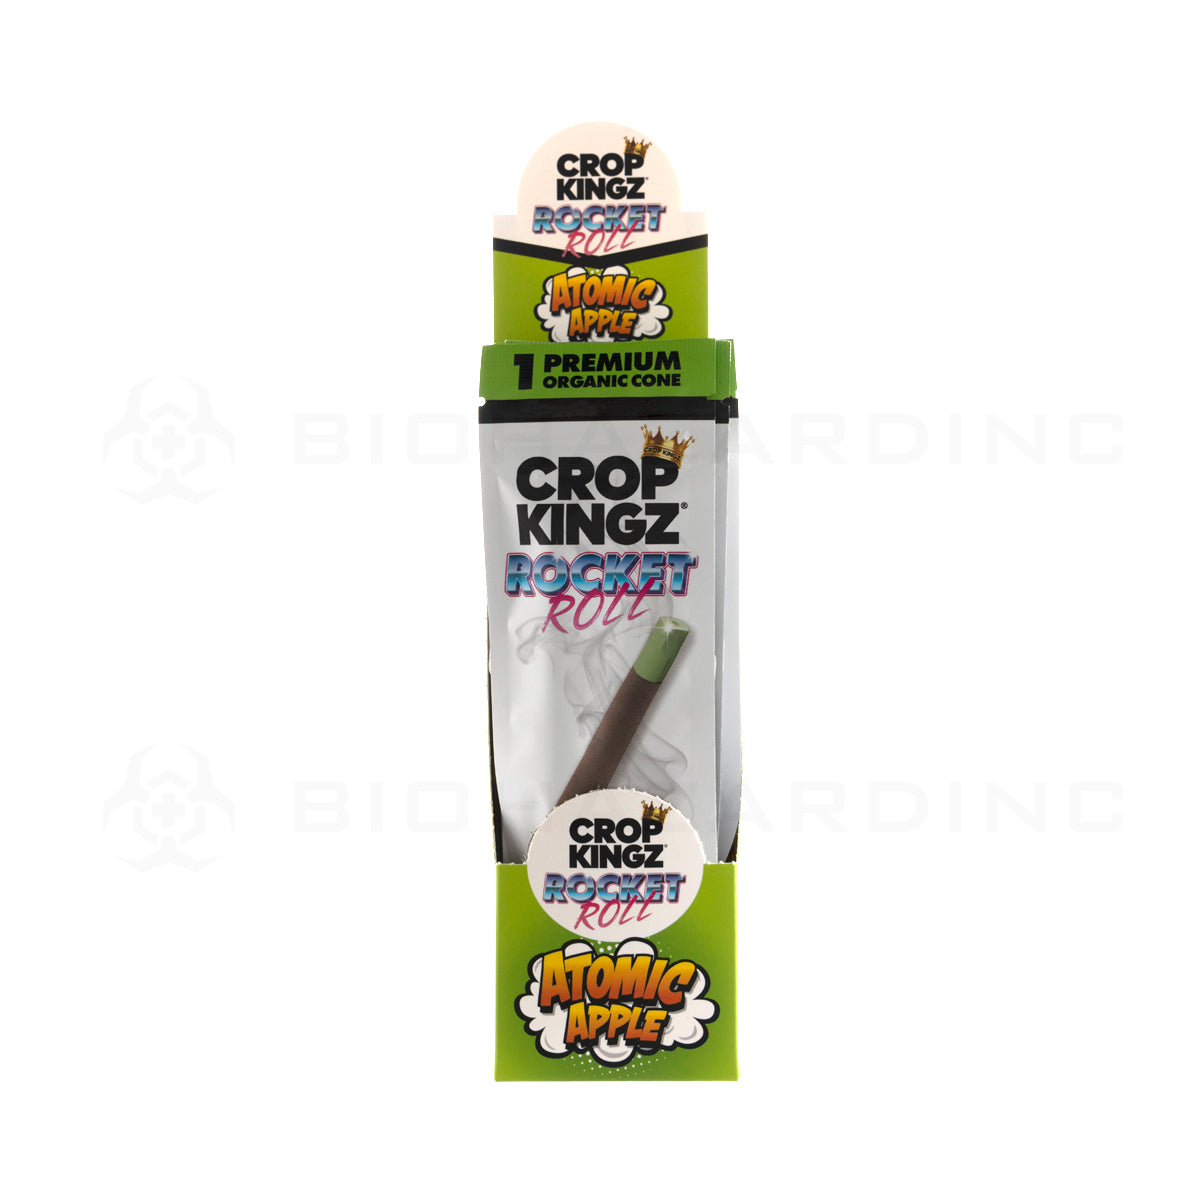 Crop Kingz | Rocket Roll Organic Hemp Wrap | Atomic Apple - 15 Count Hemp Wraps Crop Kingz   